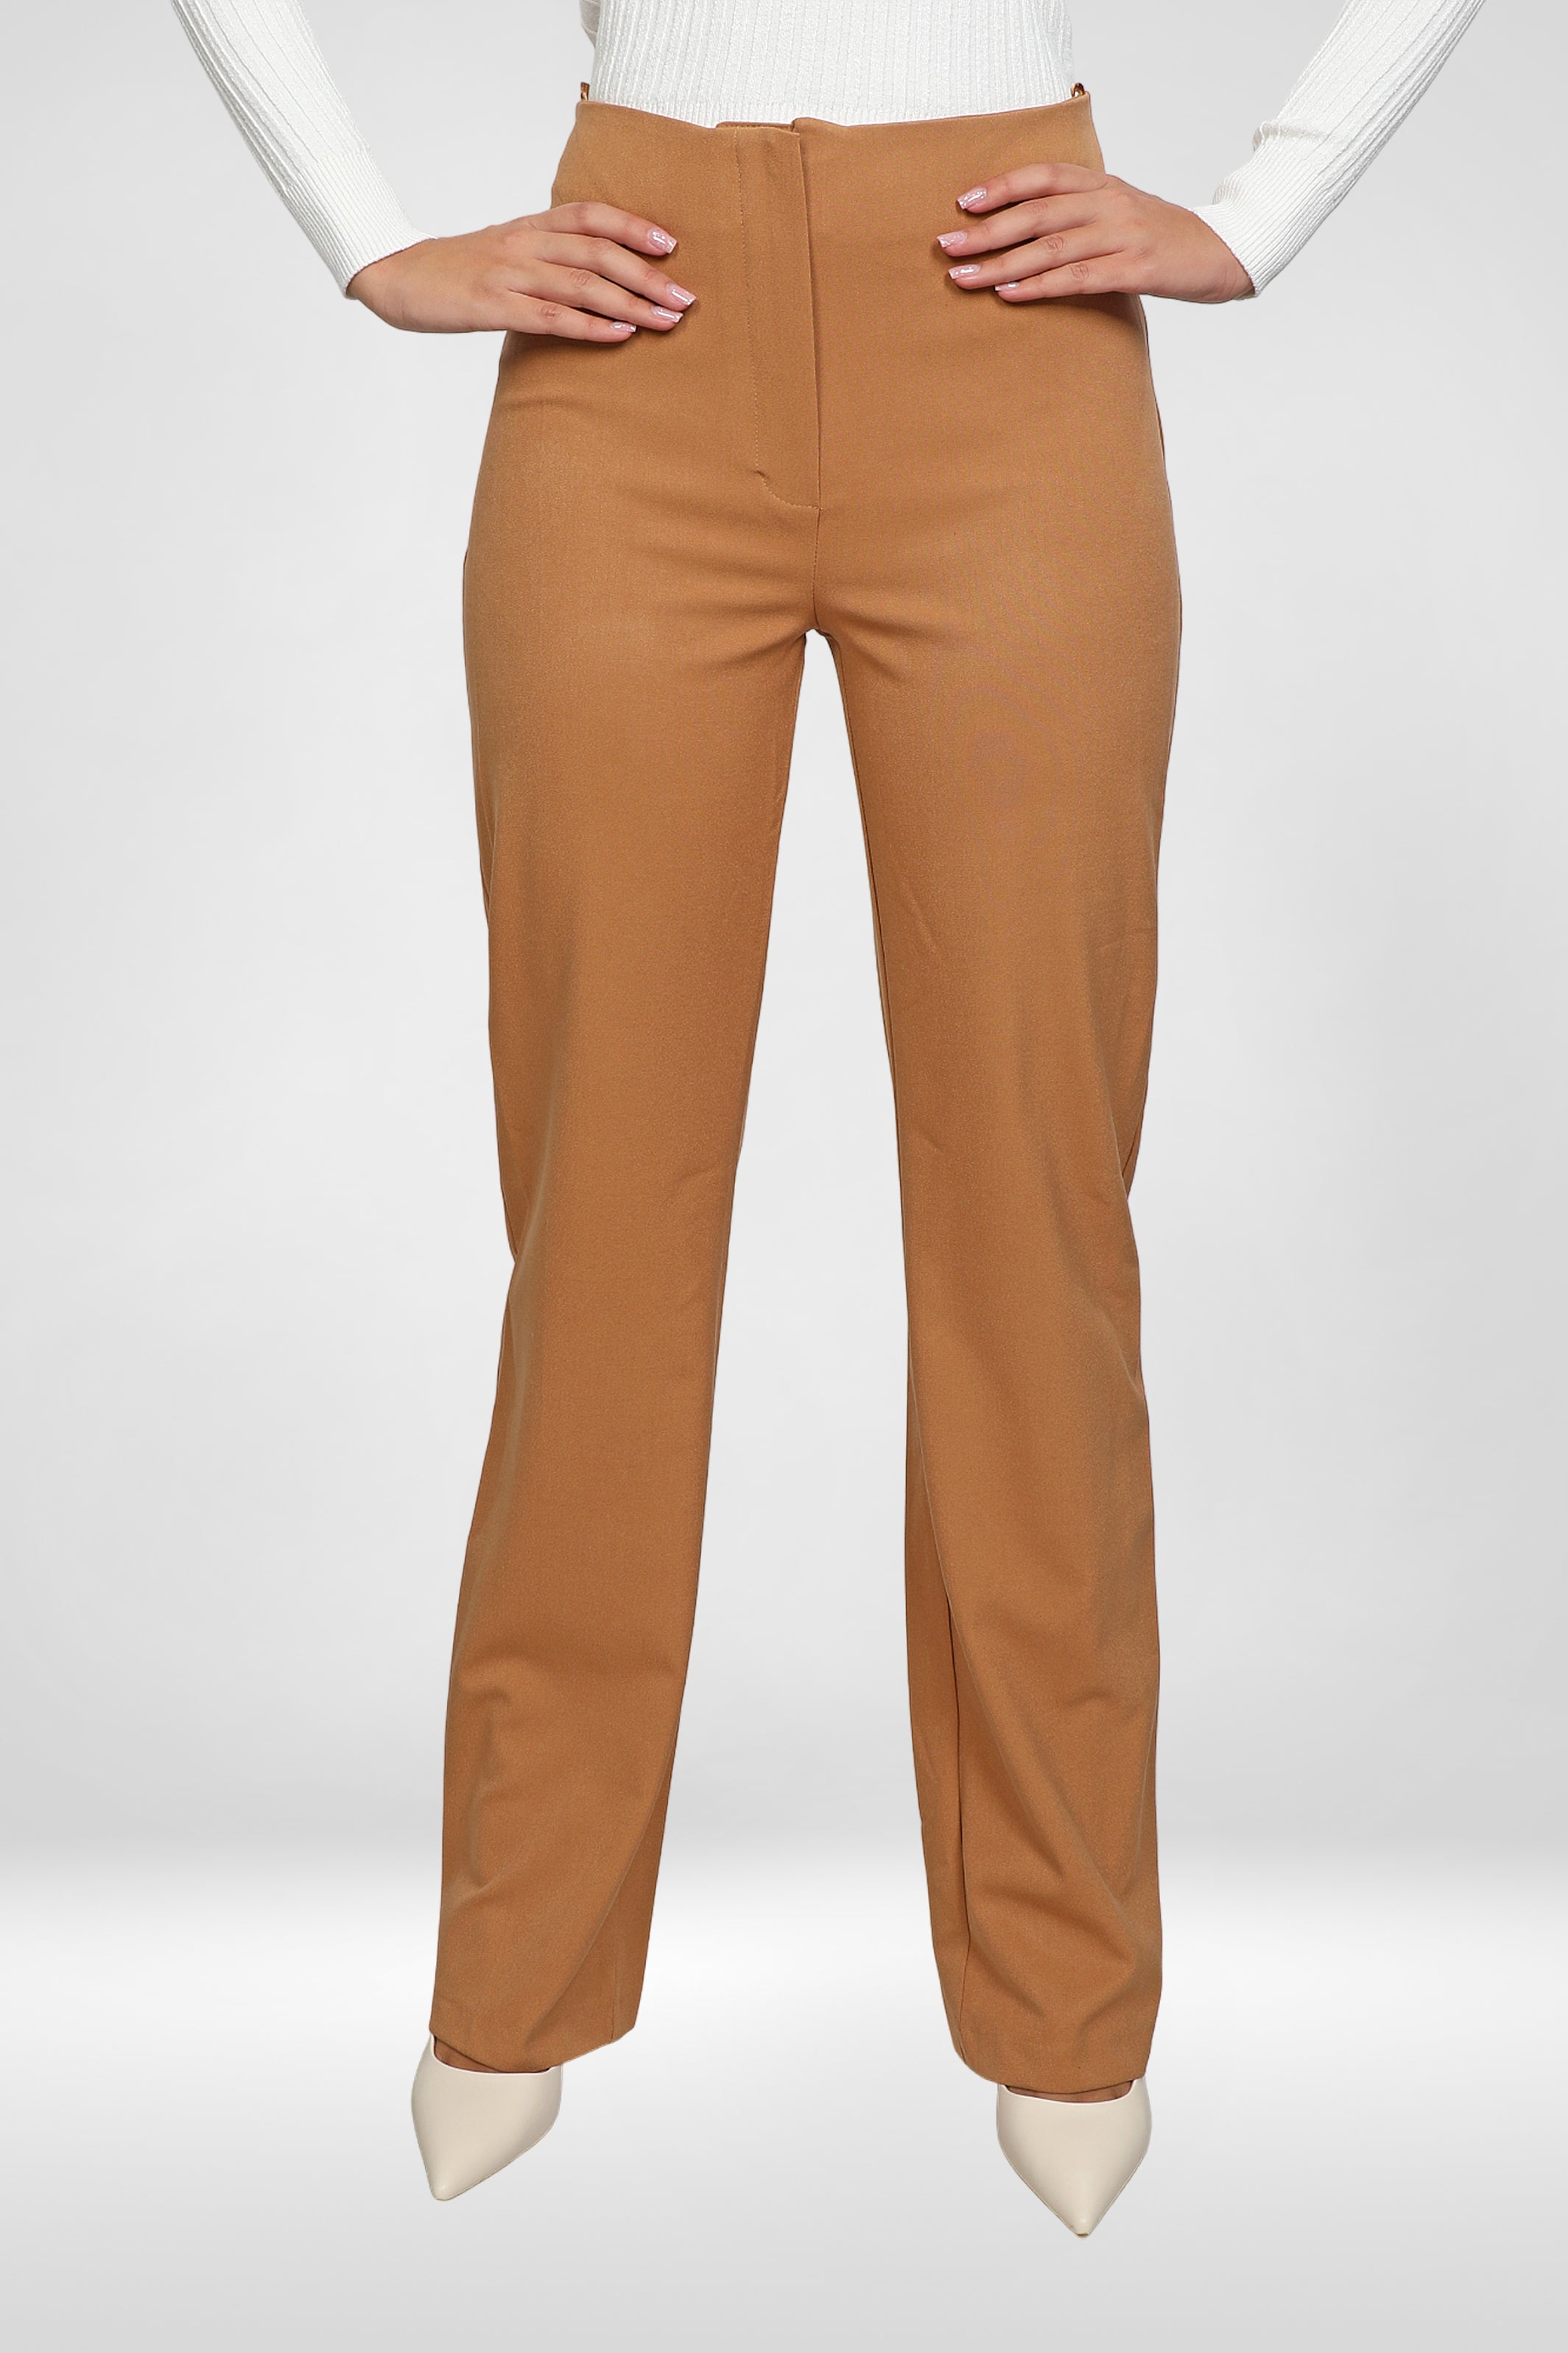 Women Stylish Casual Brown Pants